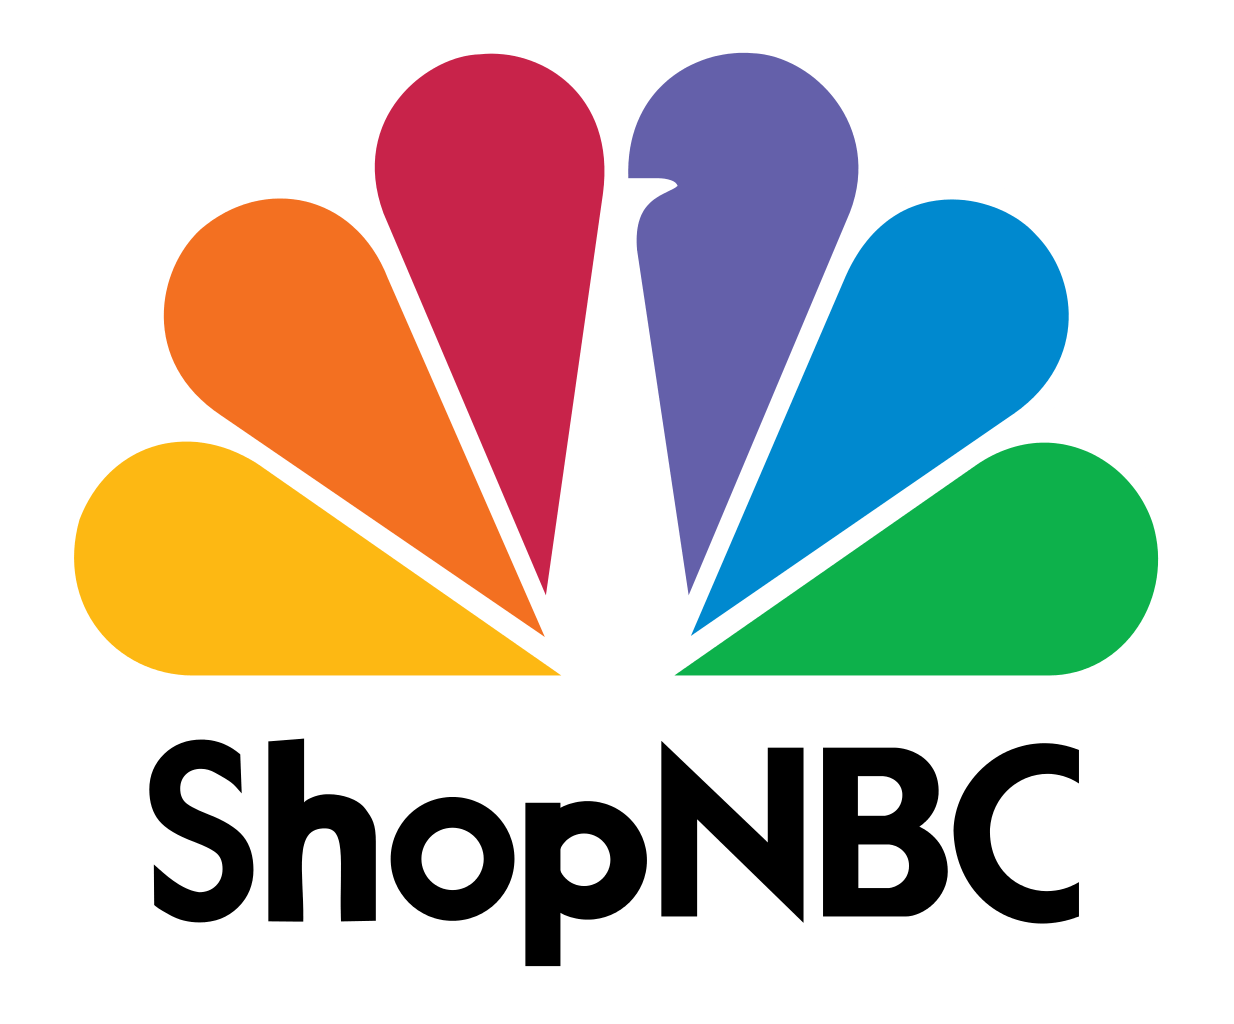 ShopNBC Logo - ShopNBC logo.svg